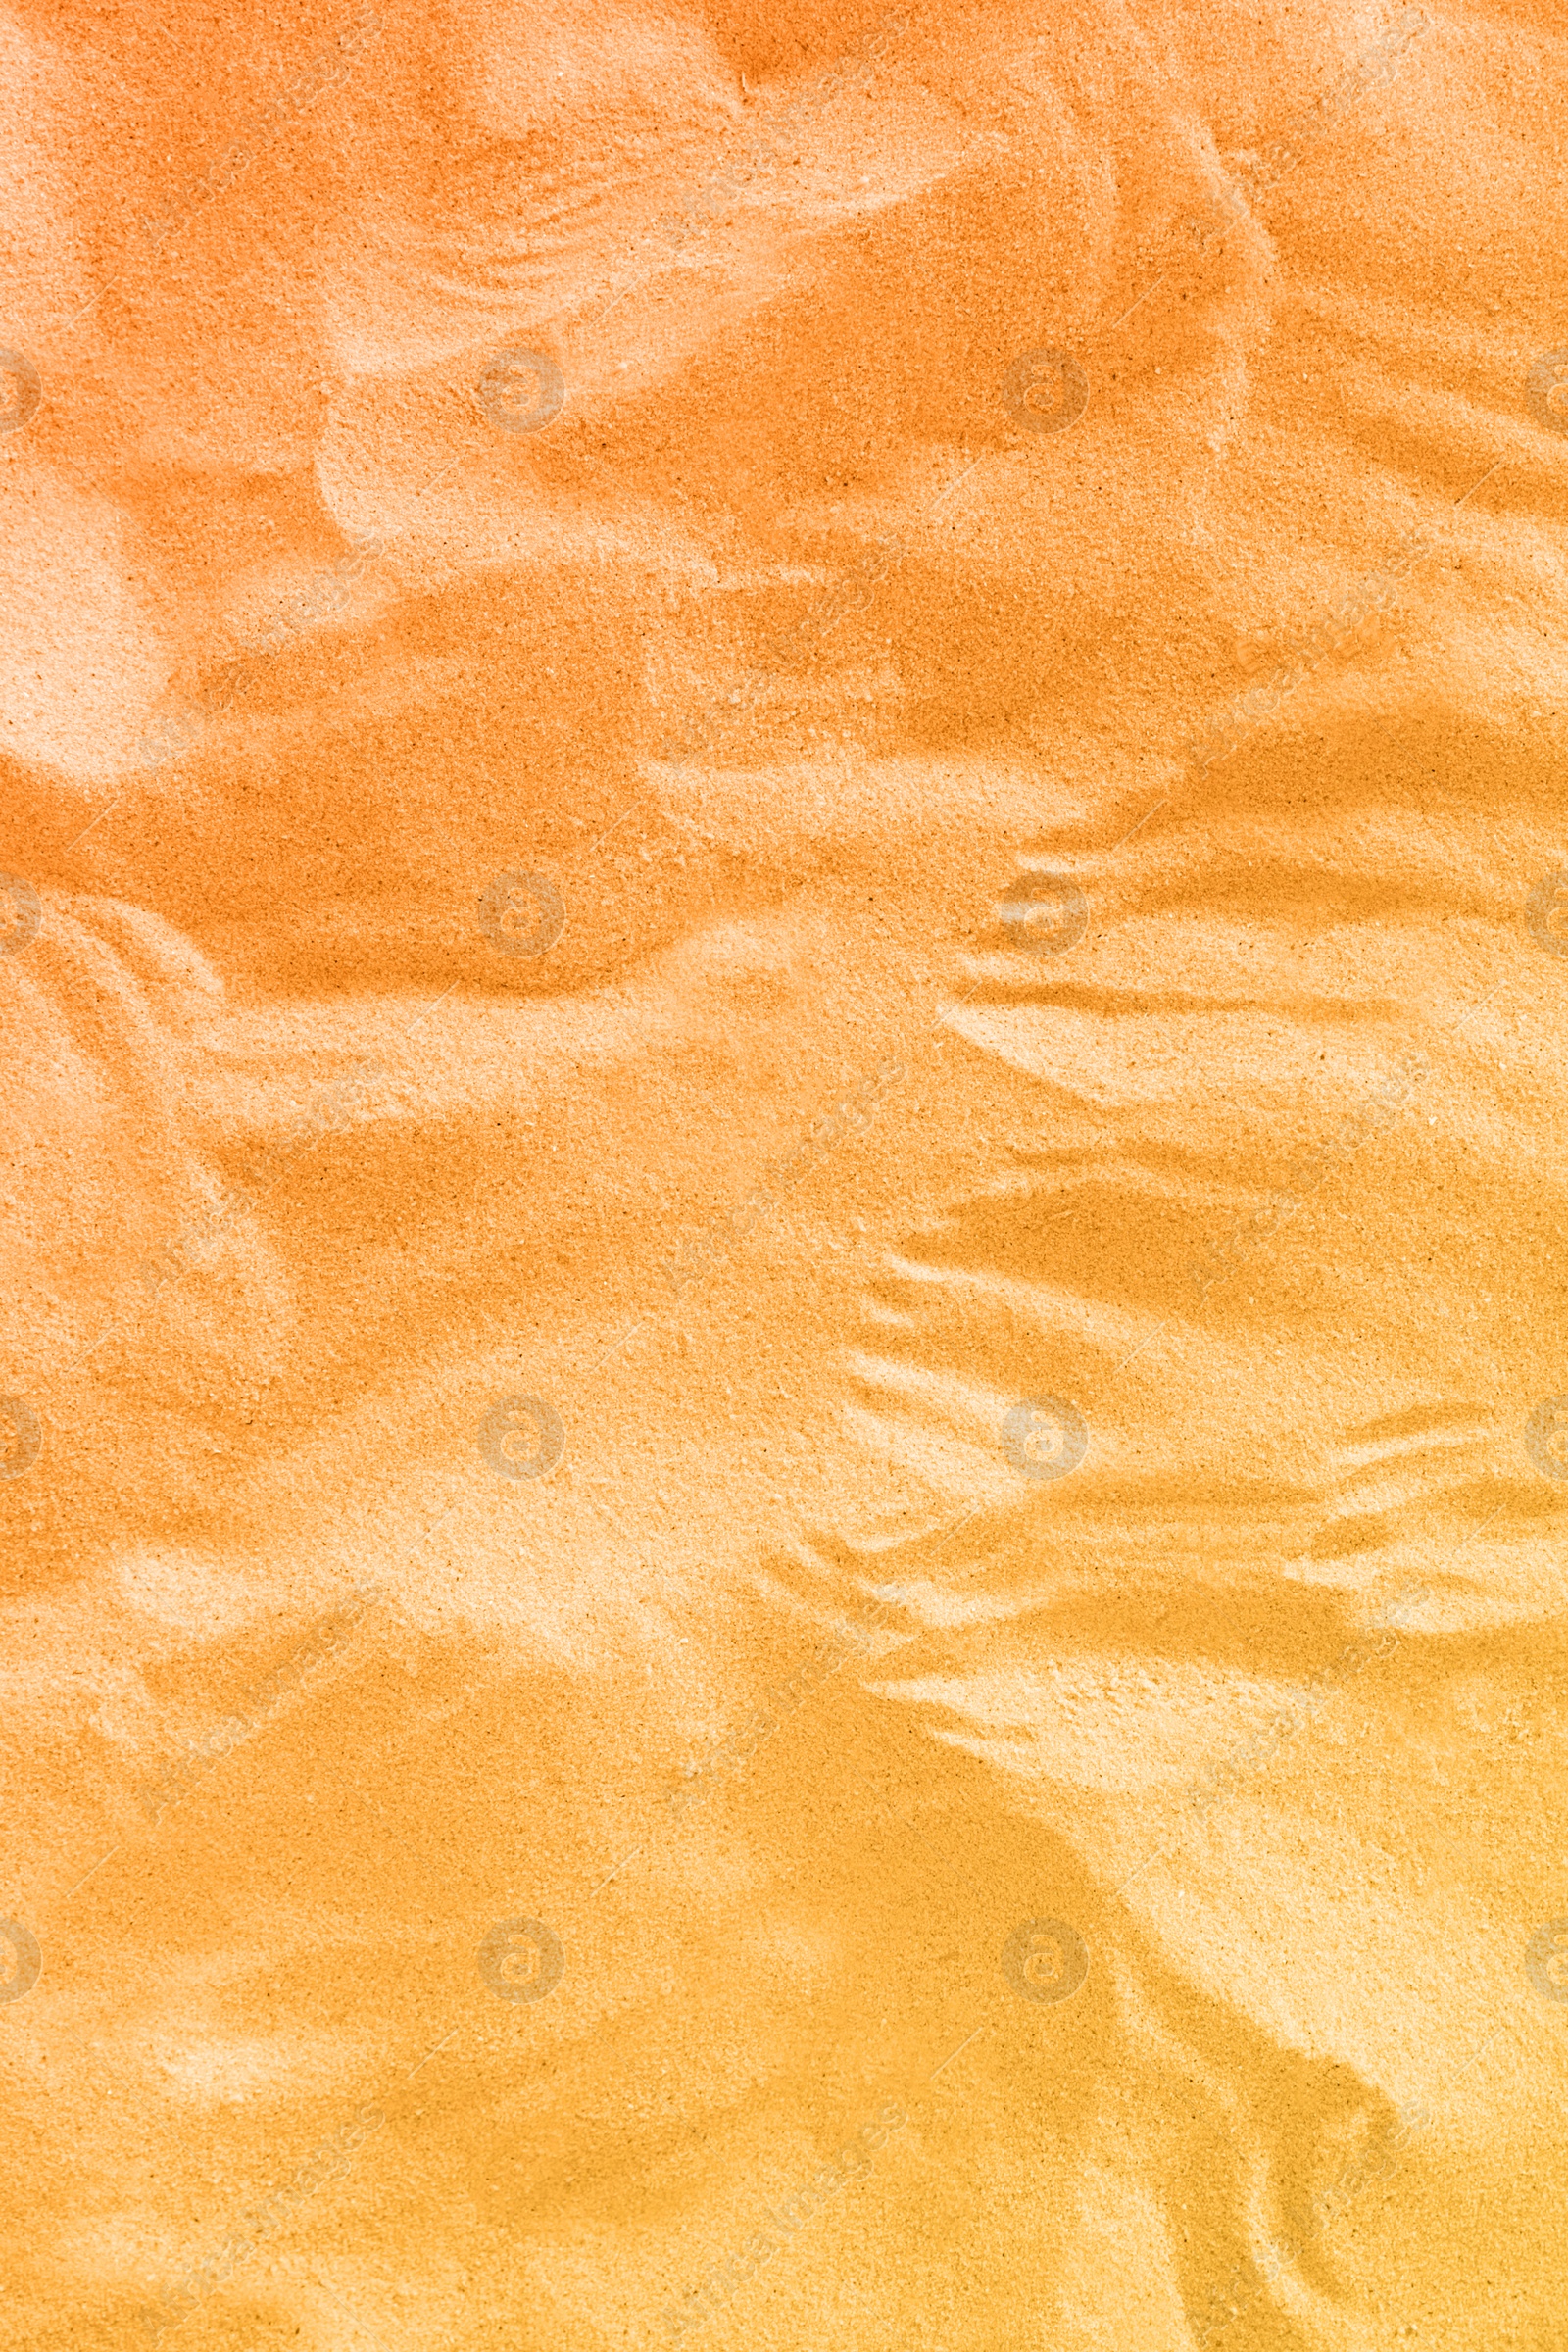 Image of Orange beach sand as background, closeup view